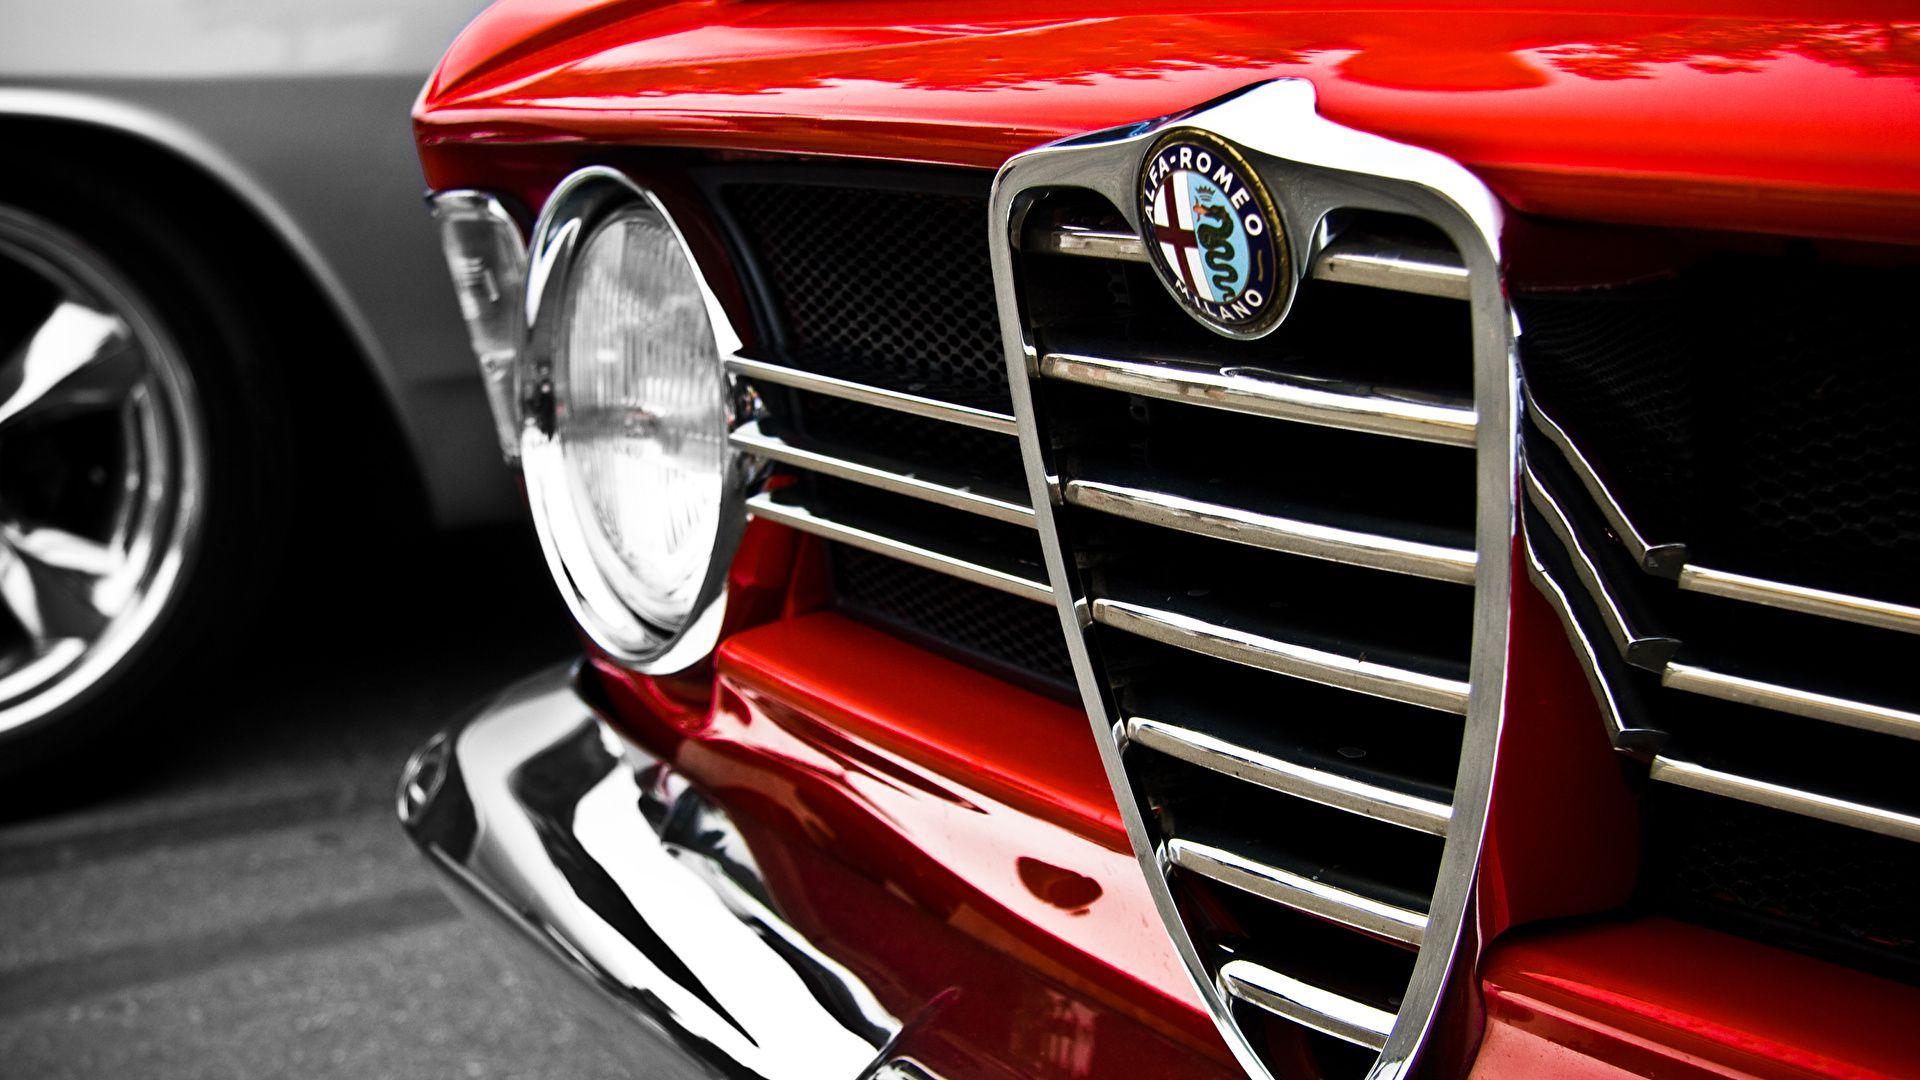 Photo Alfa Romeo Logo Emblem Red Cars Headlights Closeup 1920x1080